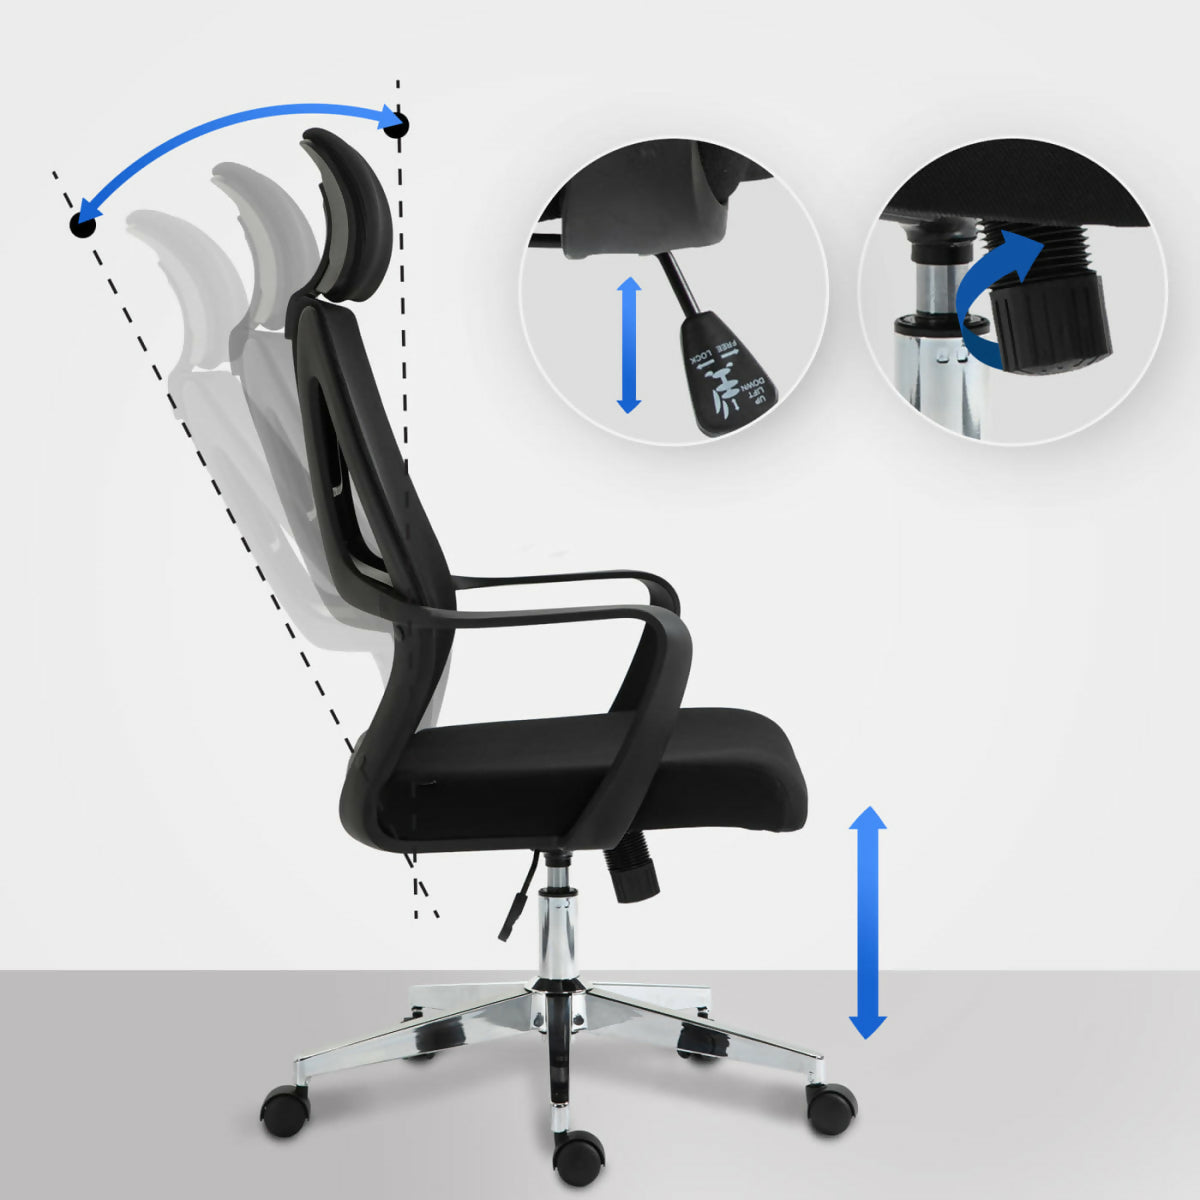 Kanab office chair - Black fabric